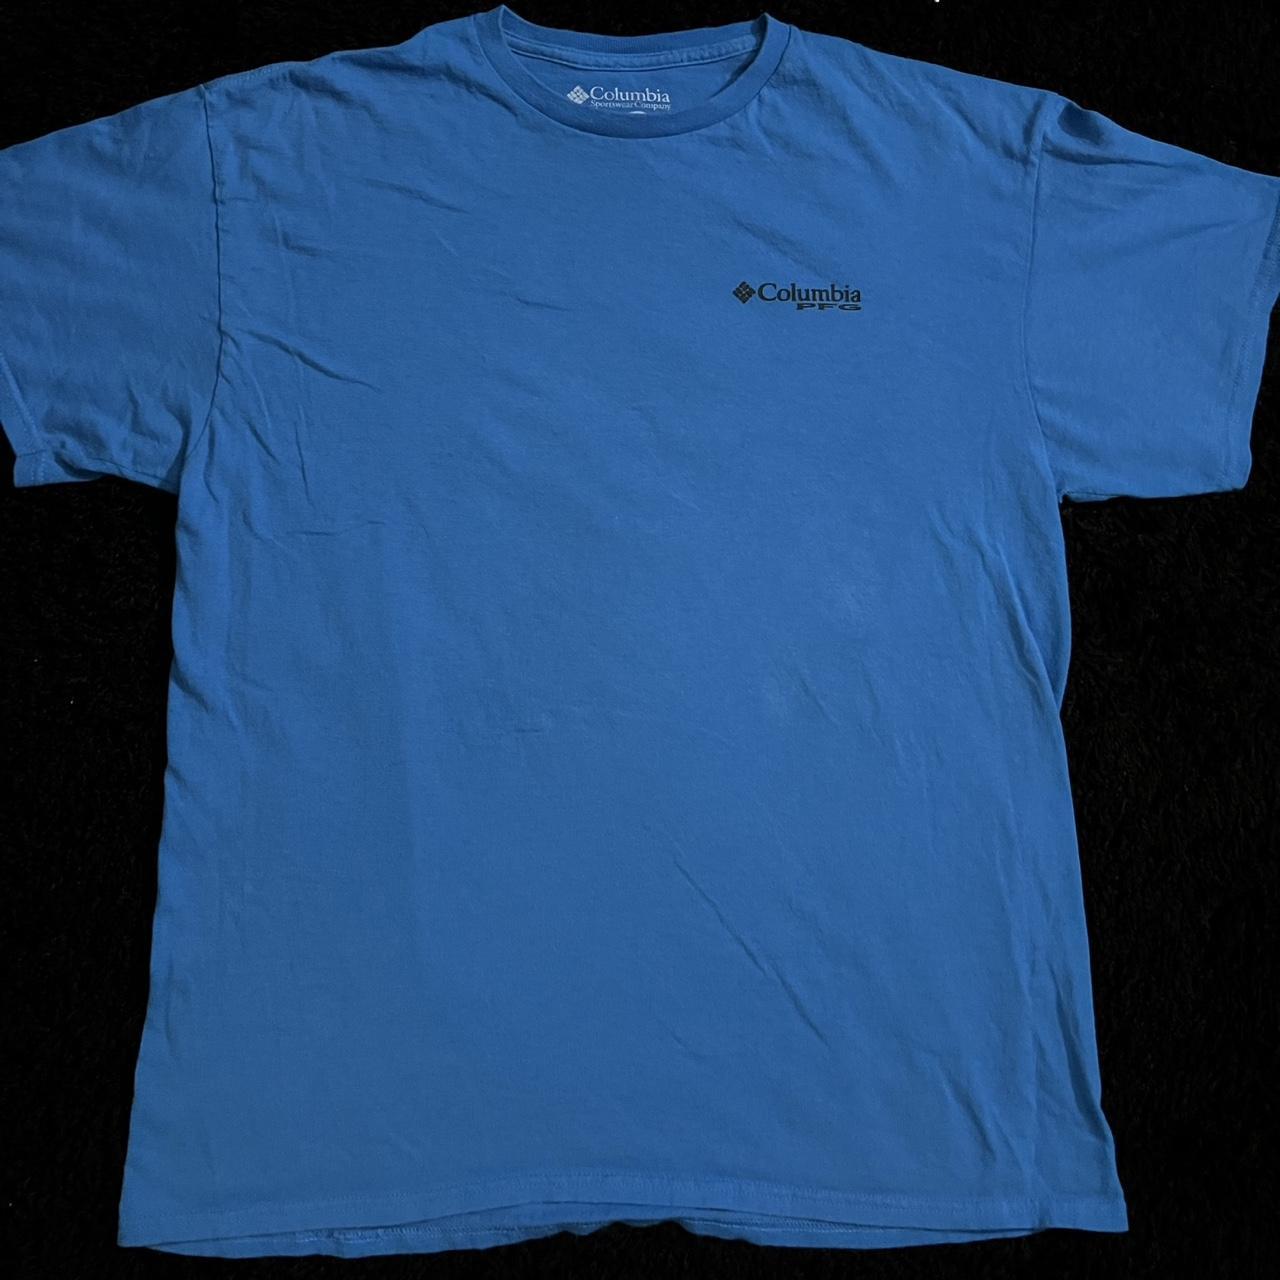 Blue Columbia Fishing Shirt #Columbia - Depop